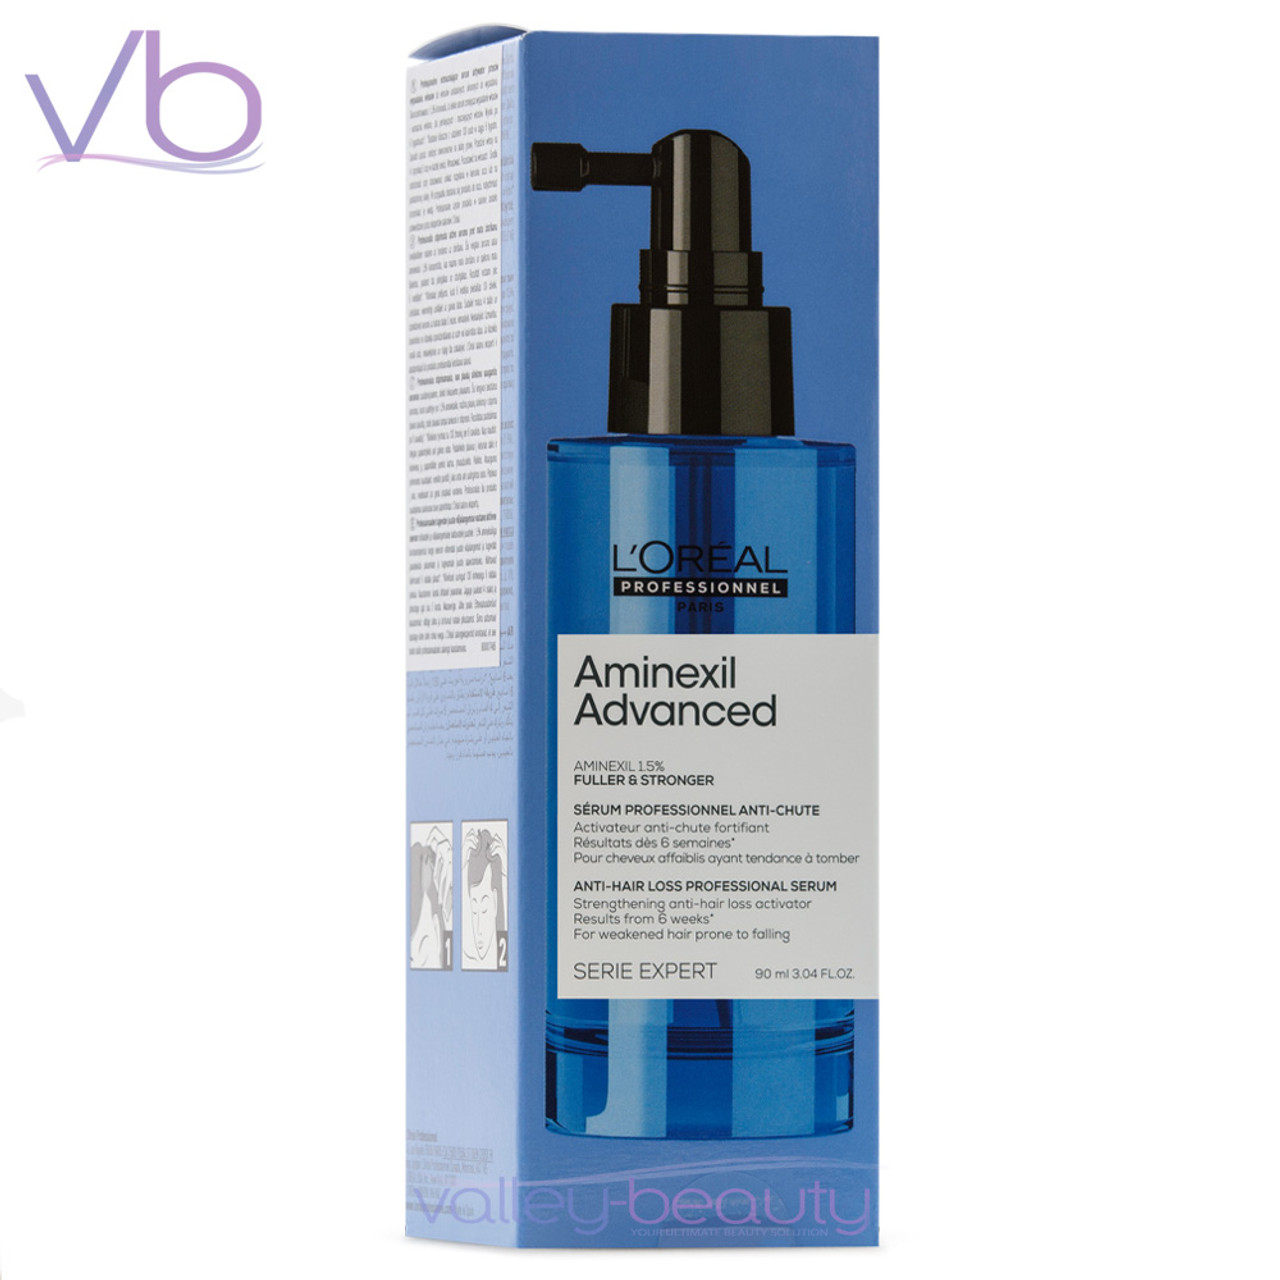 L'Oreal L’Oreal Aminexil Advanced Serum | Anti-Hair Loss Treatment for Men and Women, 3.04 fl.oz.